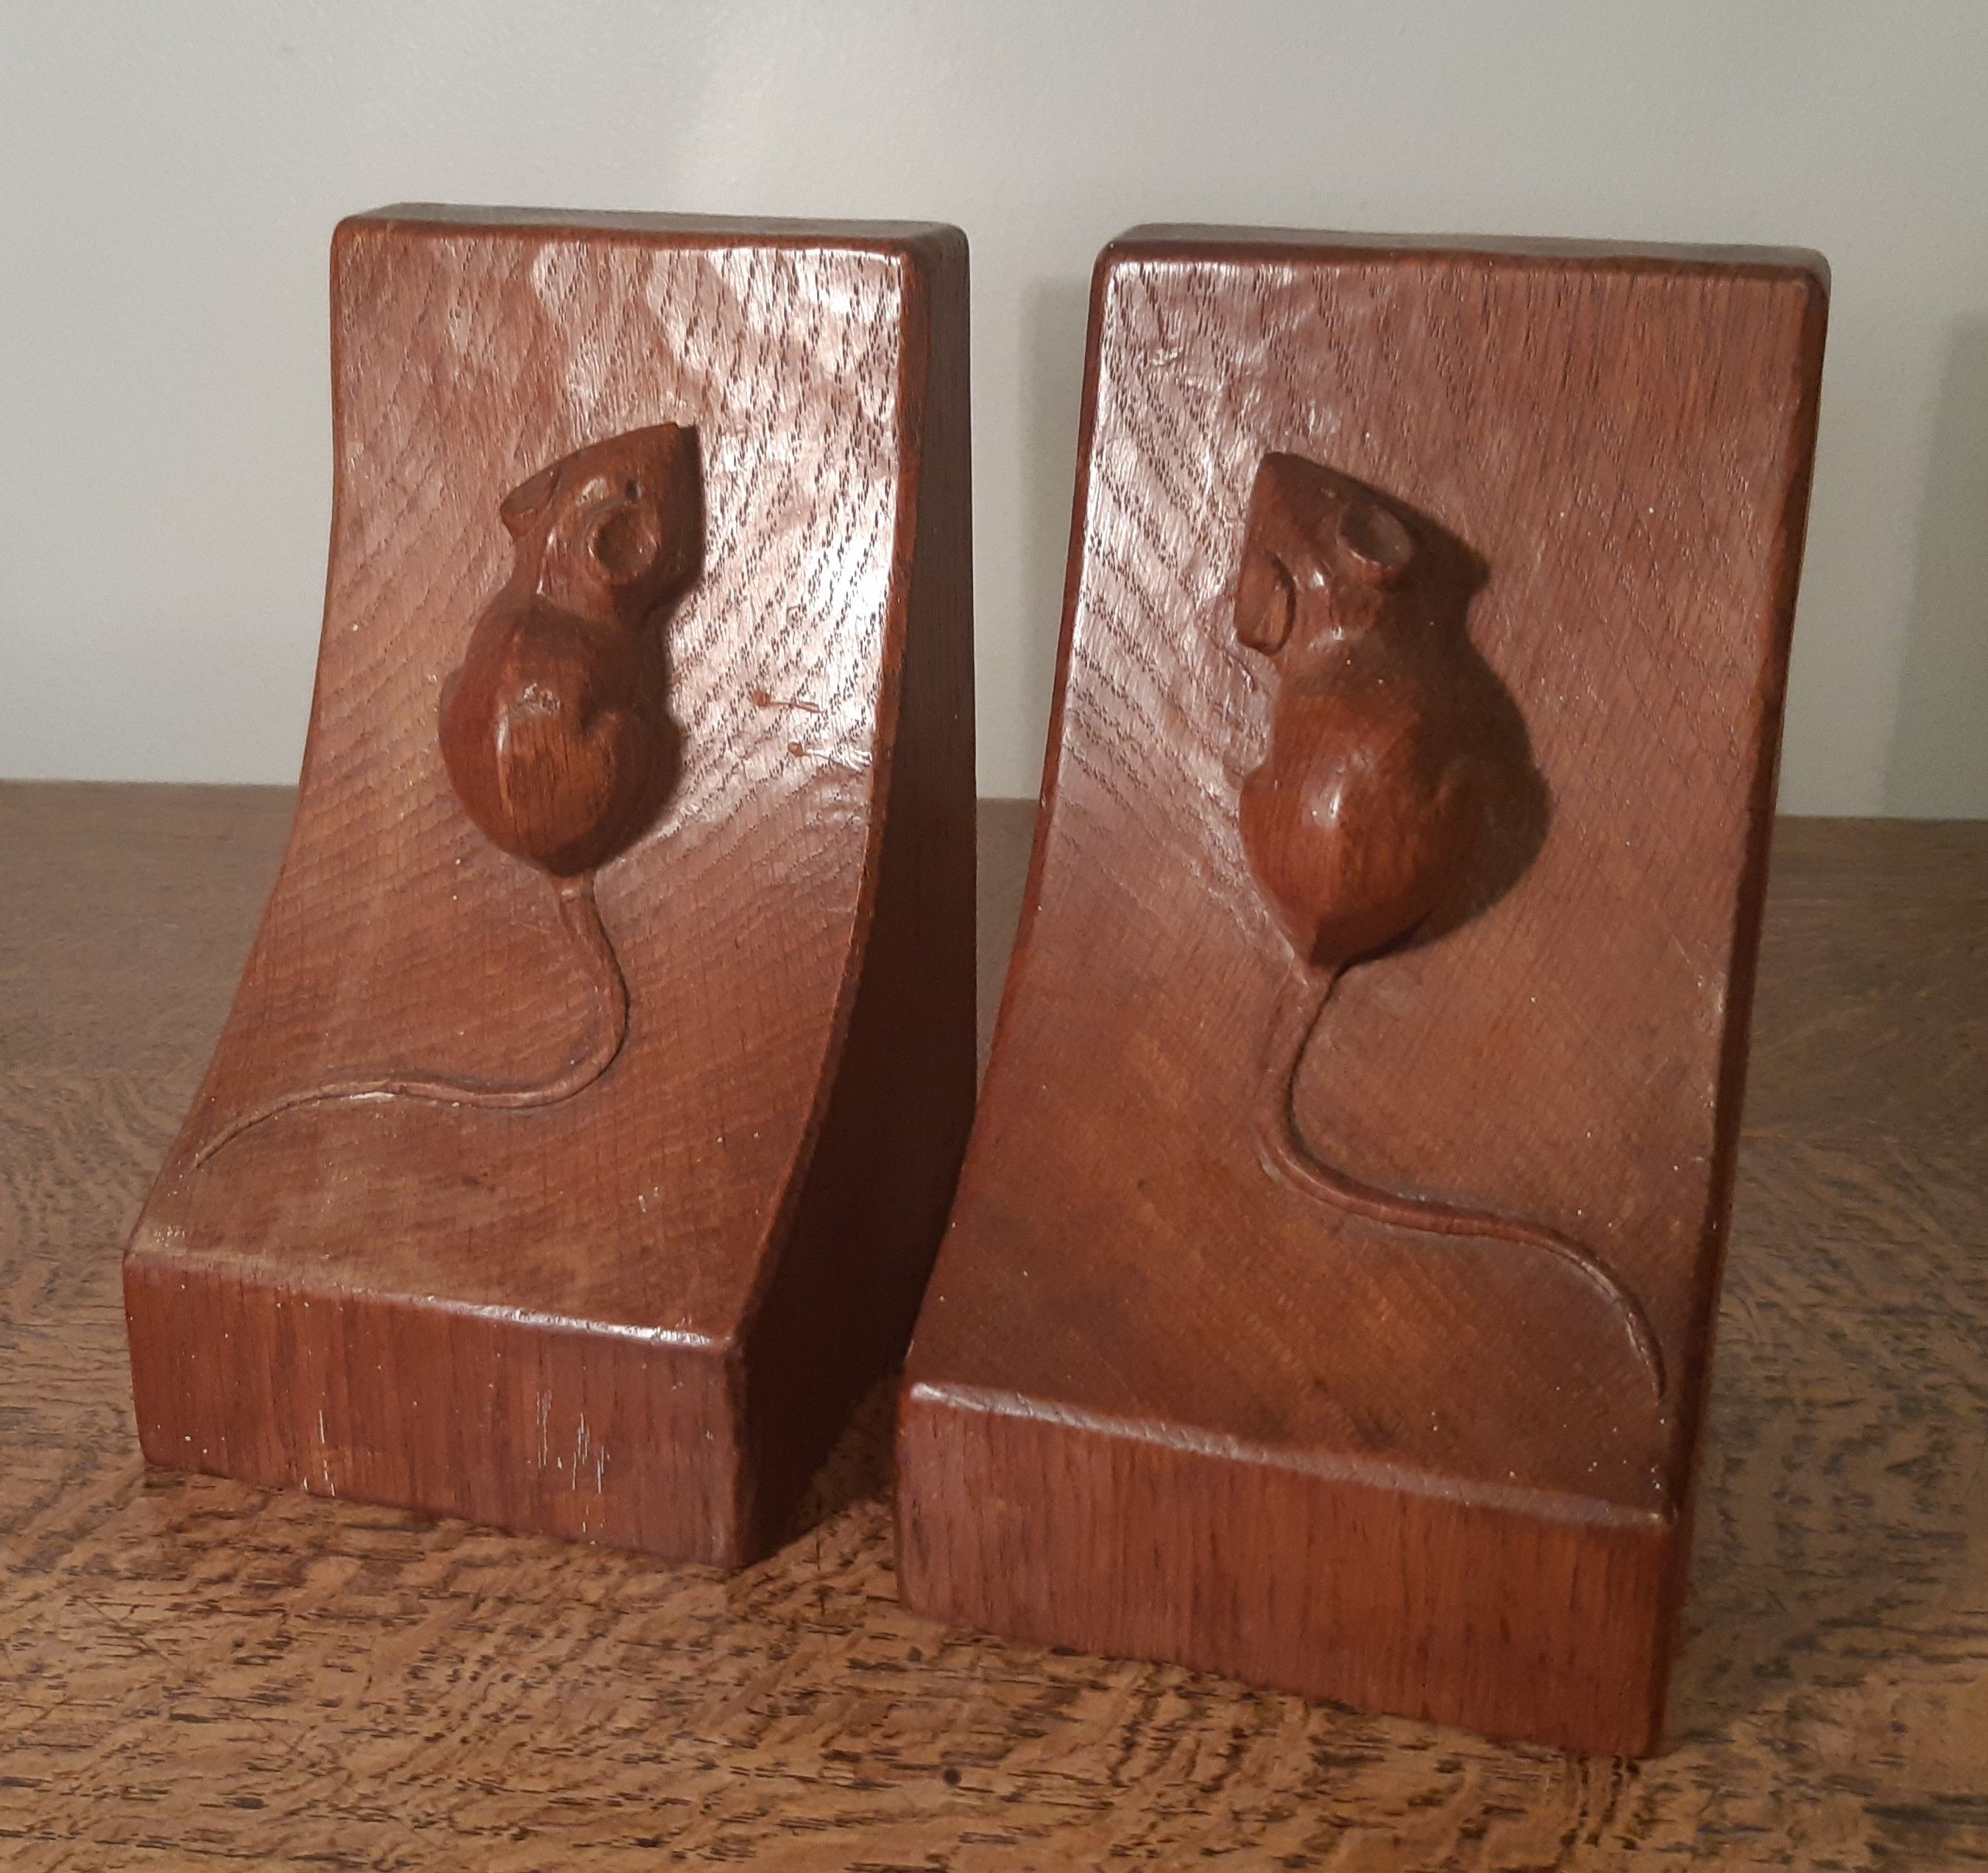 Pair of Robert 'Mouseman' Thompson of Kilburn bookends, each 9cm wide x 9.7cm deep x 15.7/8cm